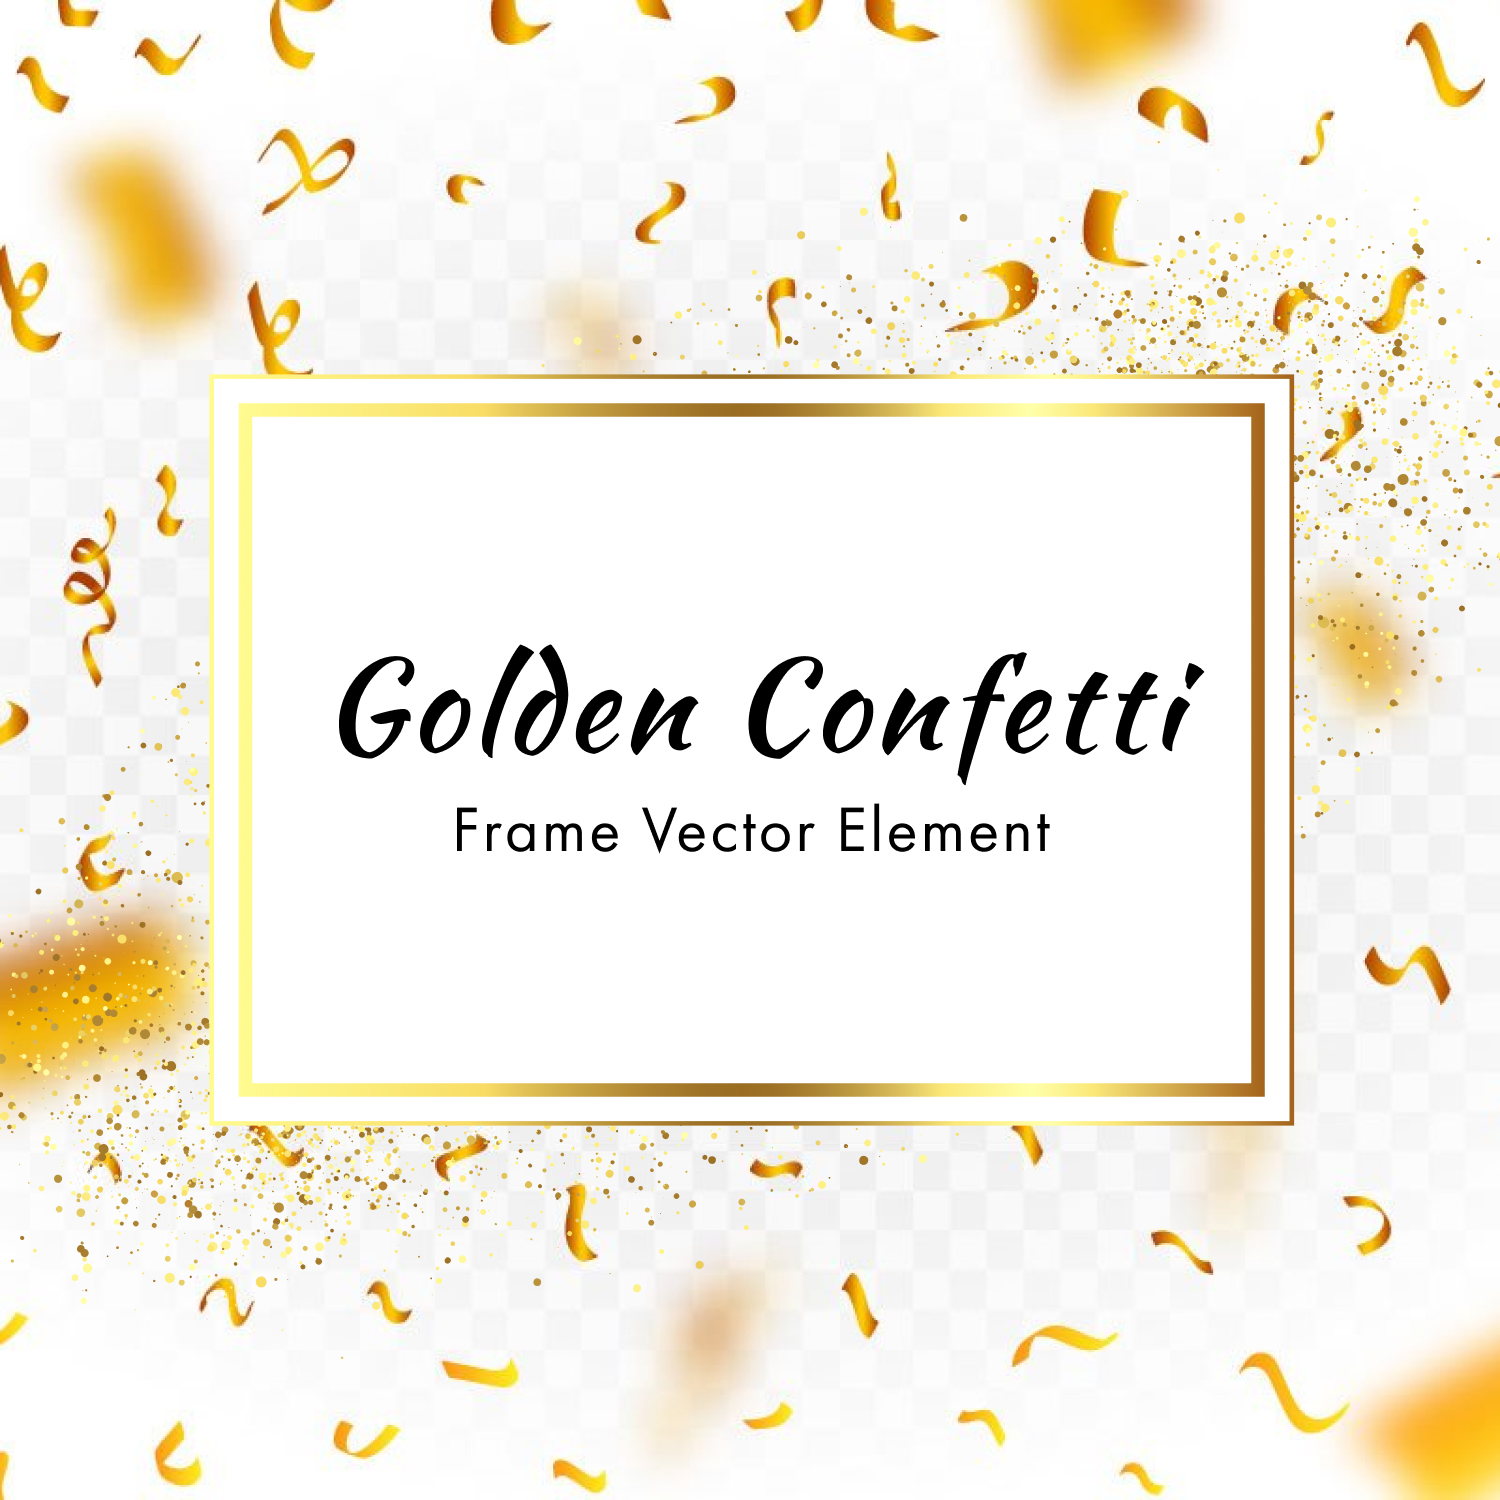 Golden Confetti Frame Vector Element.